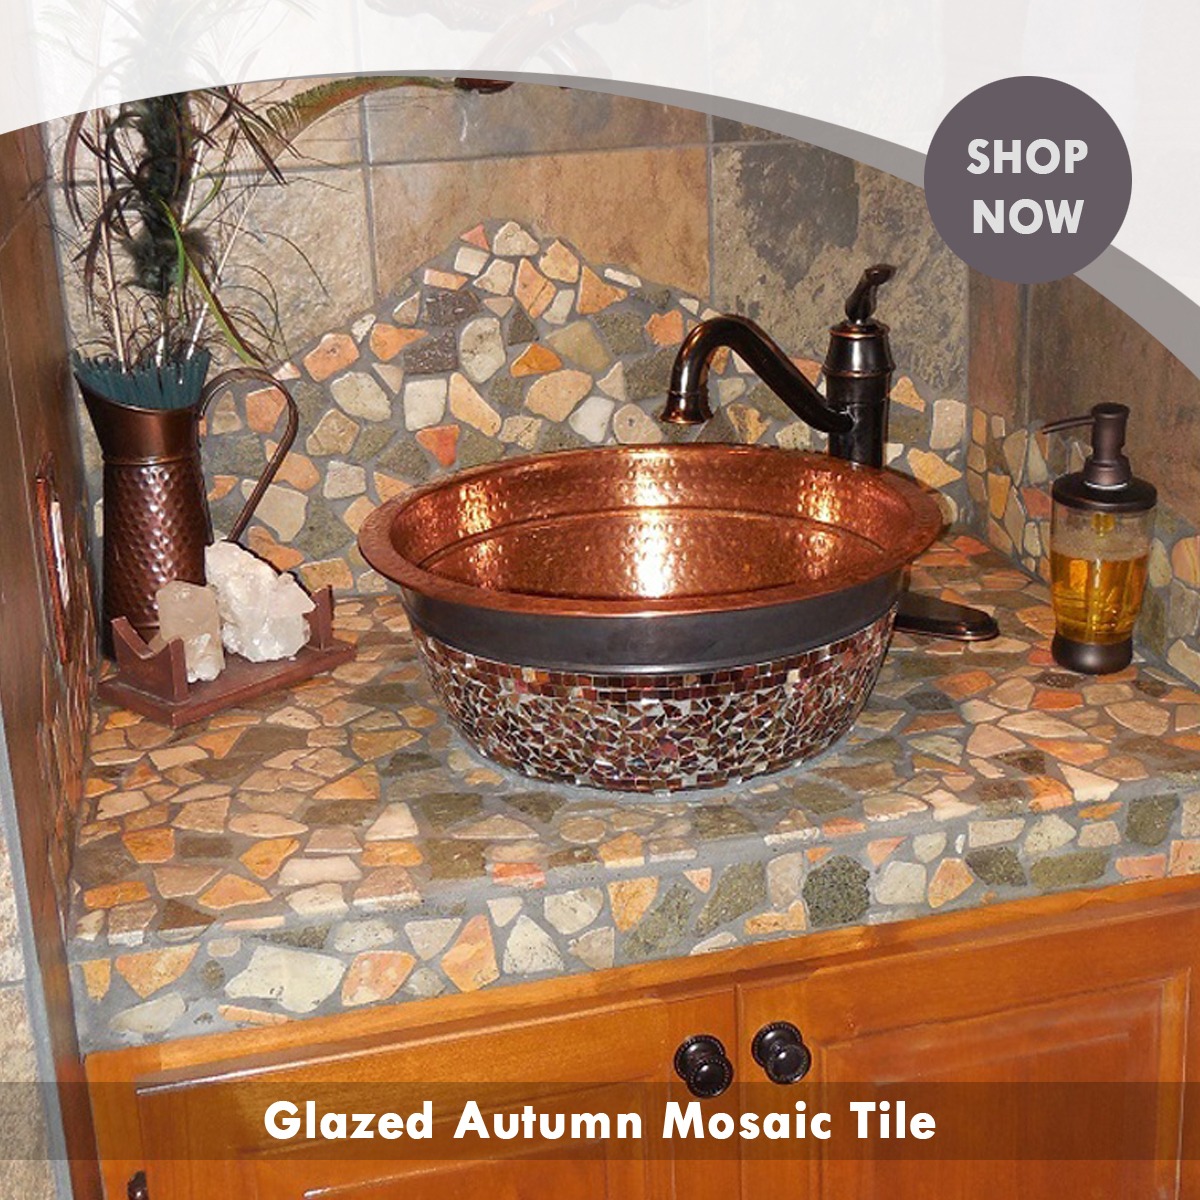  Glazed Autumn Mosaic Tile